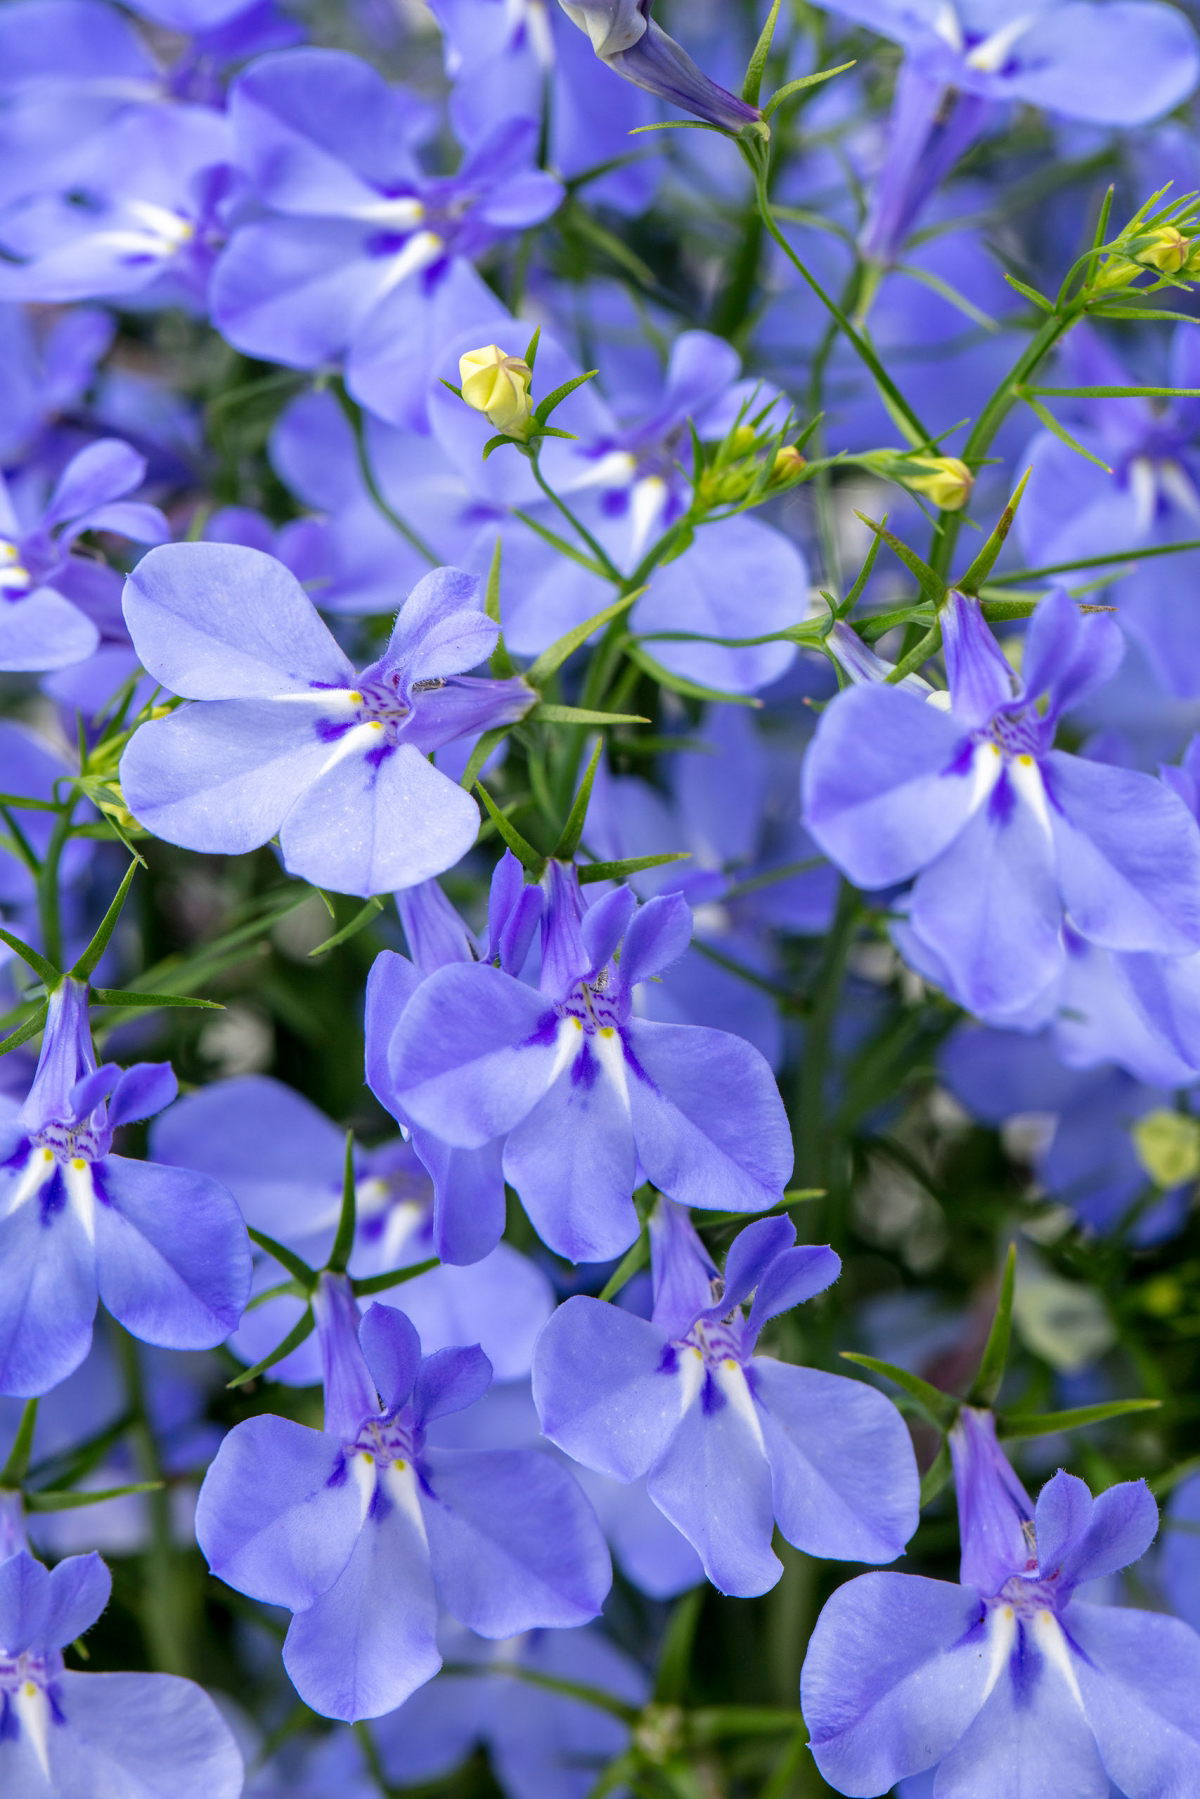 lobelia plant with blue flowers